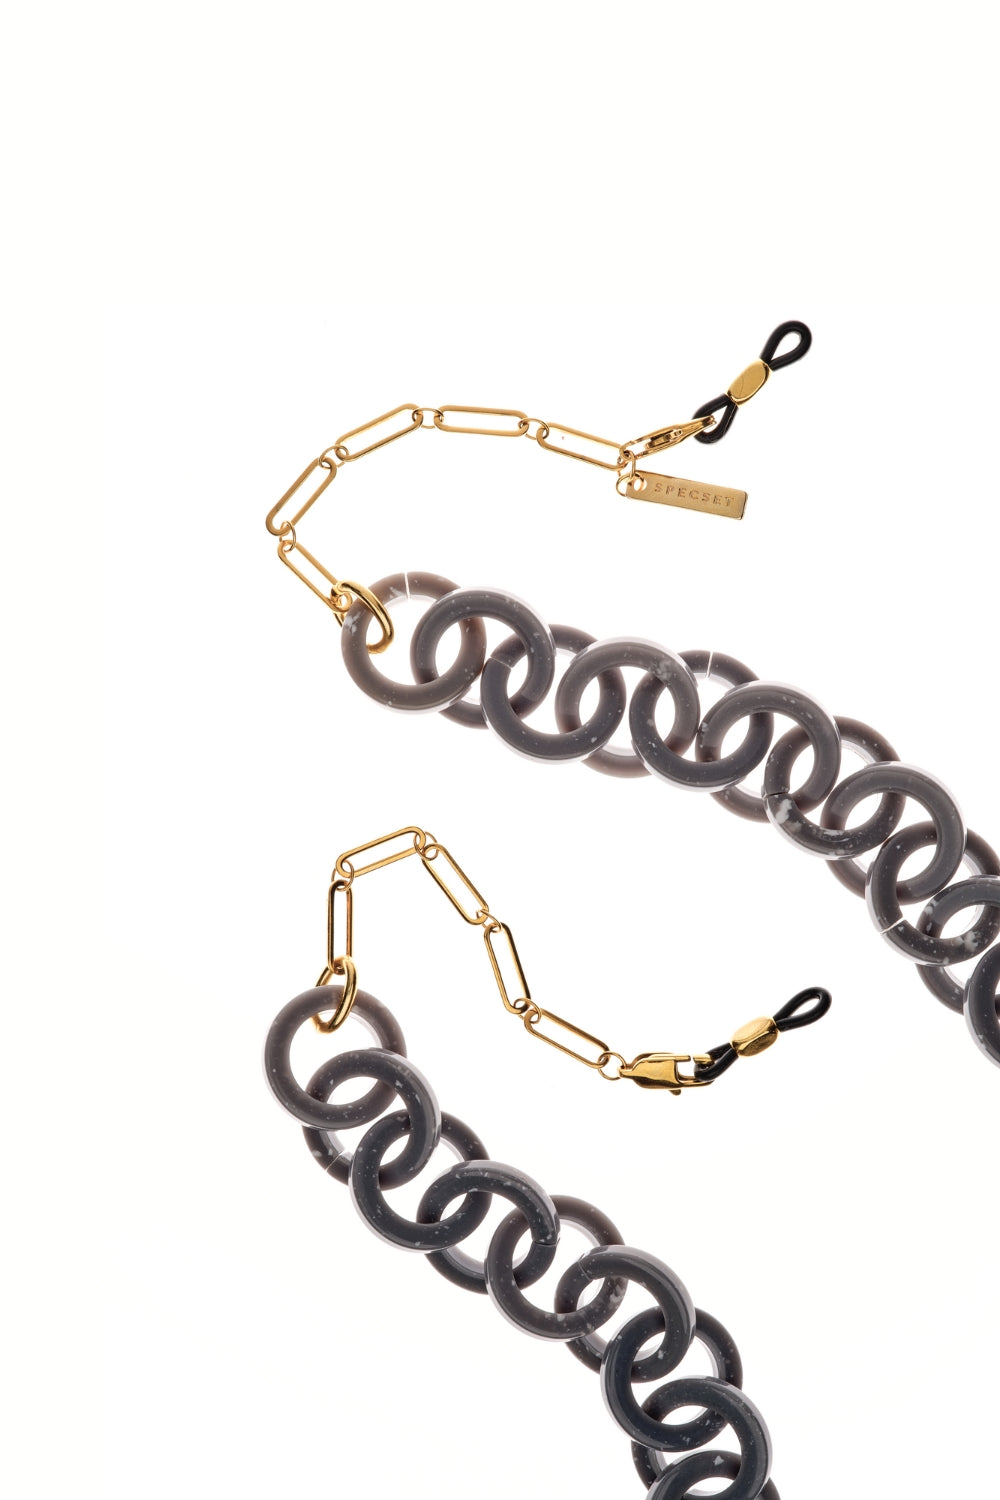 RING LIKE - GOLD GRAY Eyewear Chain | SPECSET